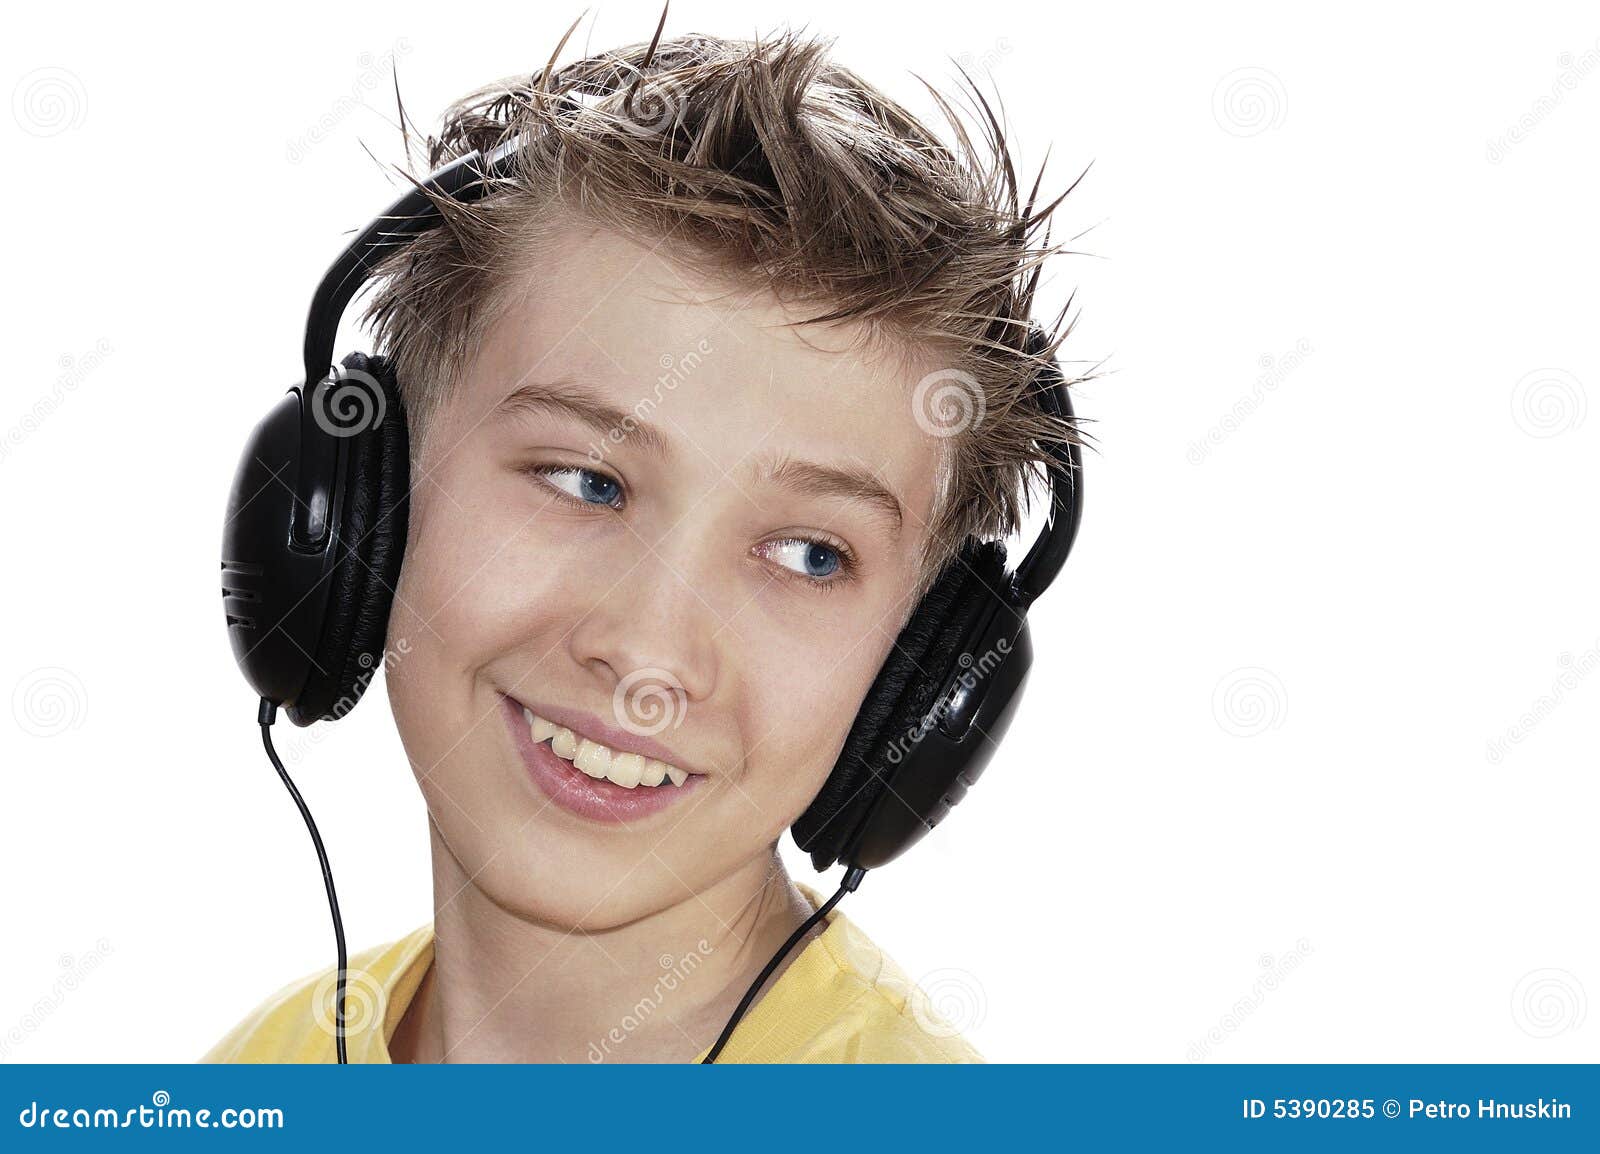 boy-listening-to-music-headphones-5390285.jpg